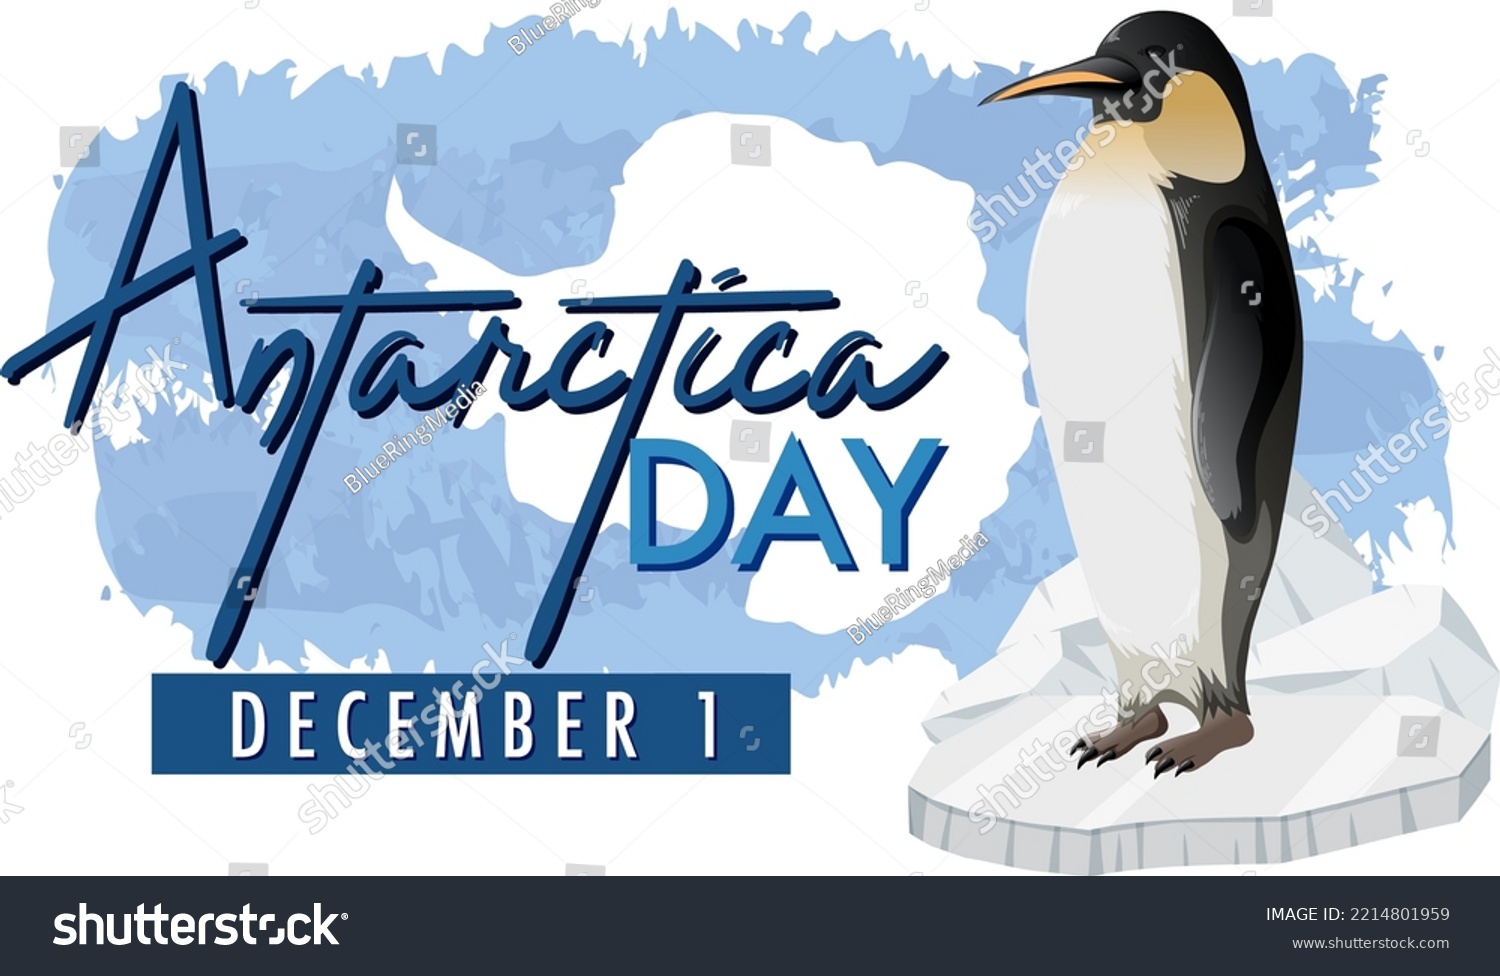 SVG of Antarctica day poster template illustration svg